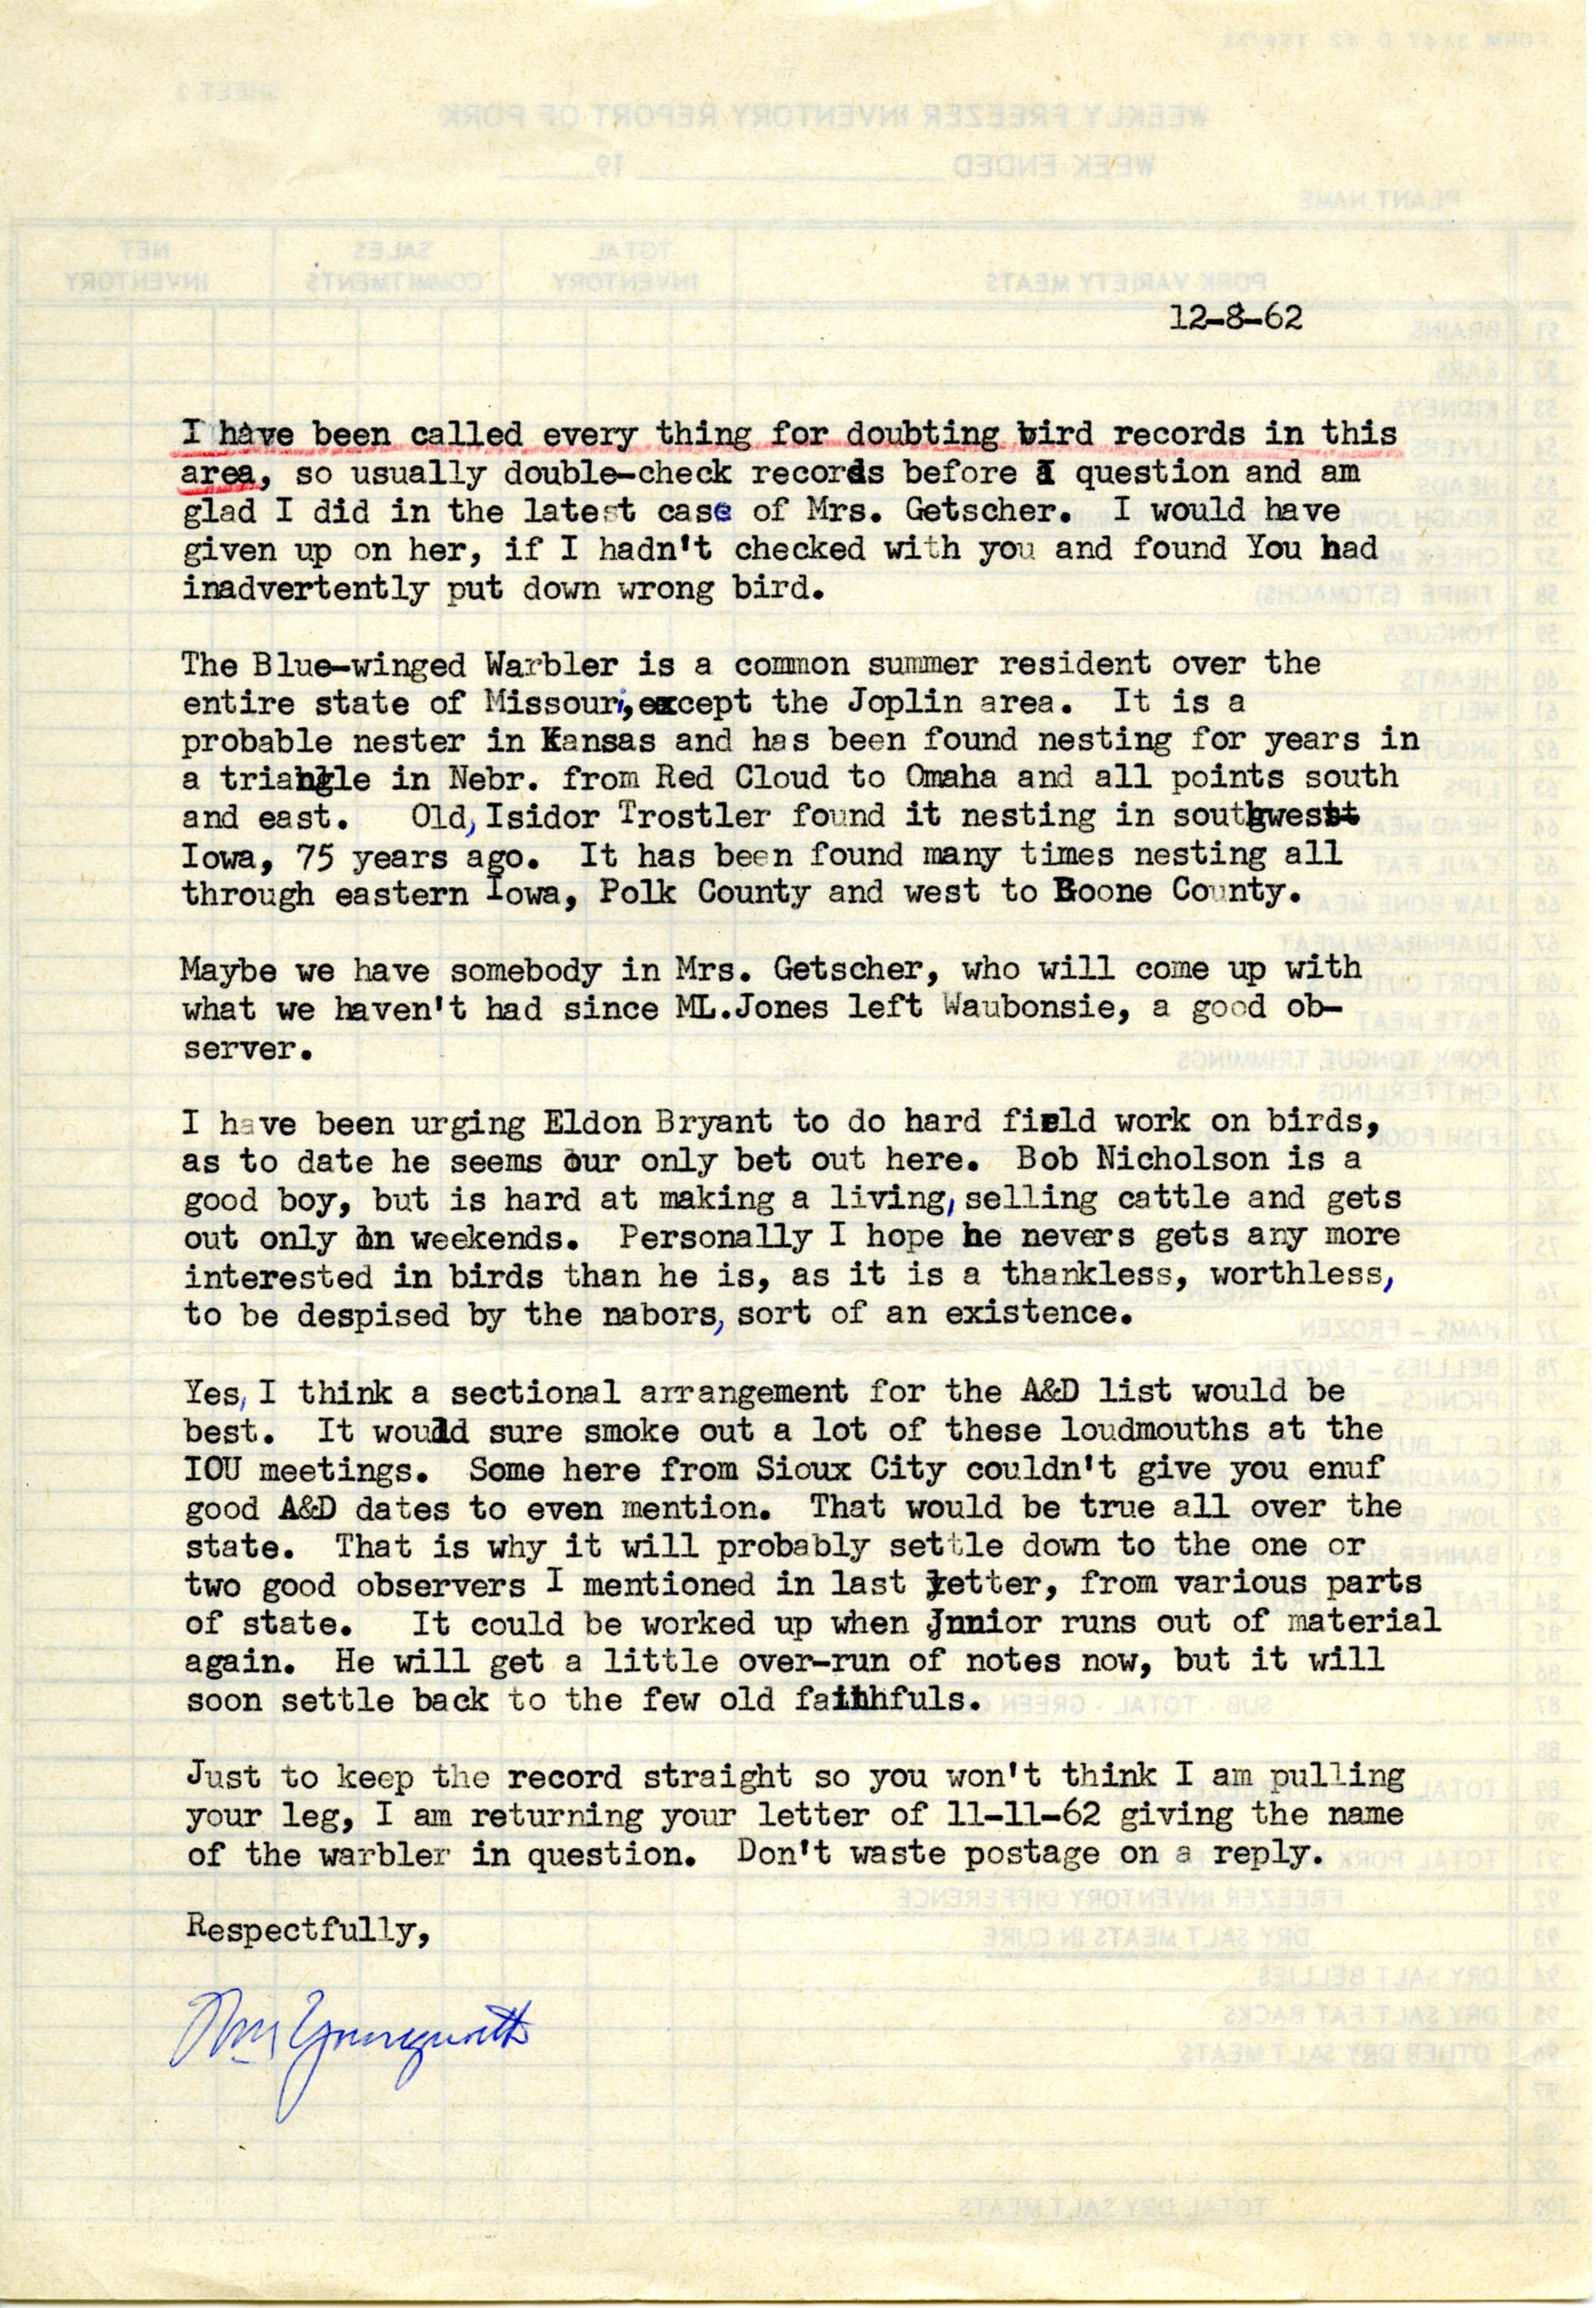 Bill Youngworth letter to Woodward Hart Brown regarding Blue-winged Warbler range, December 8, 1962